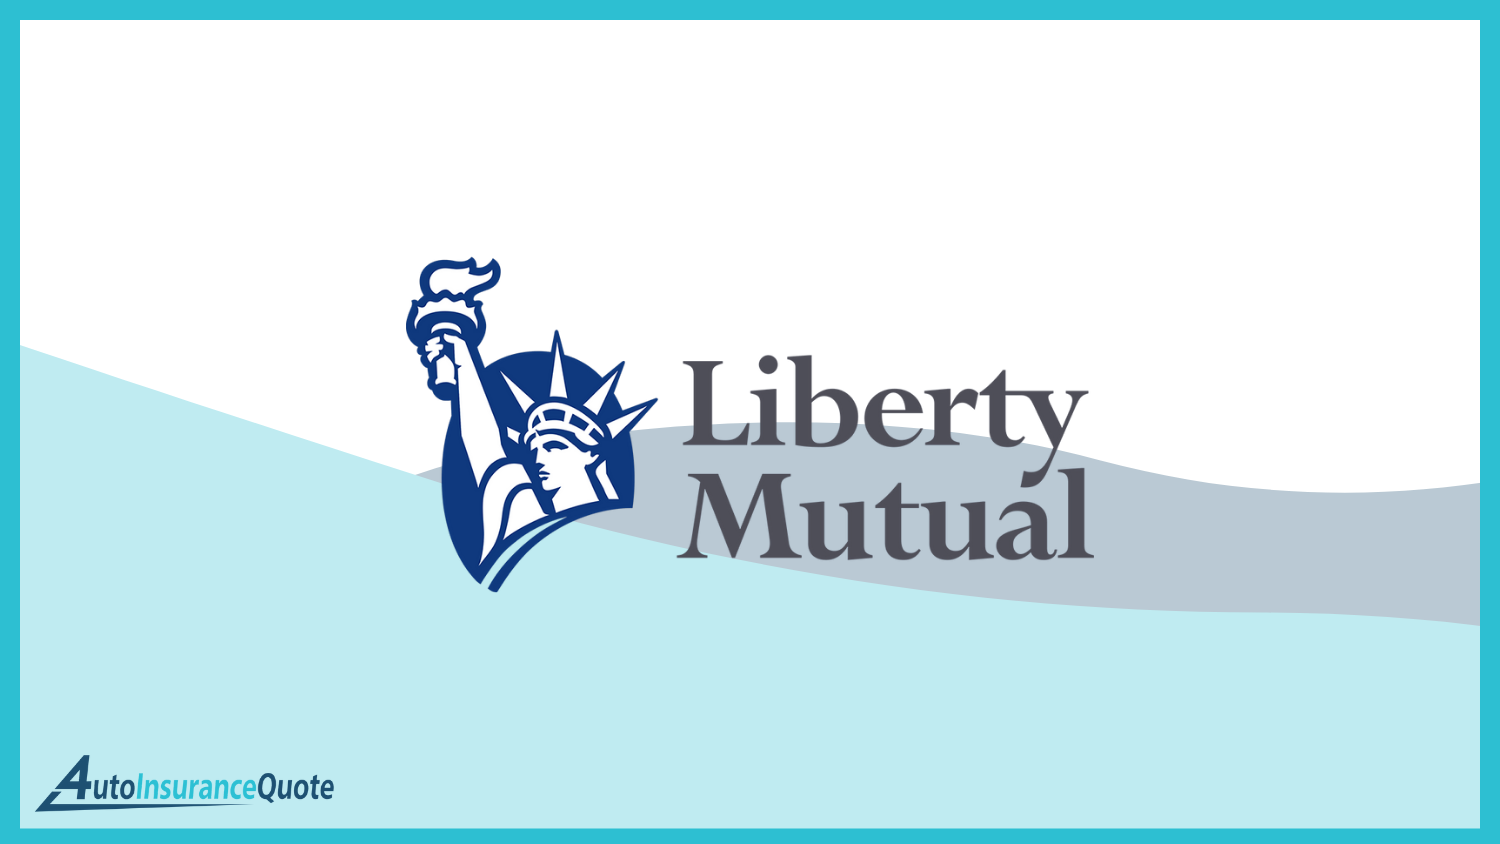 Cheap Auto Insurance for Teachers: Liberty Mutual